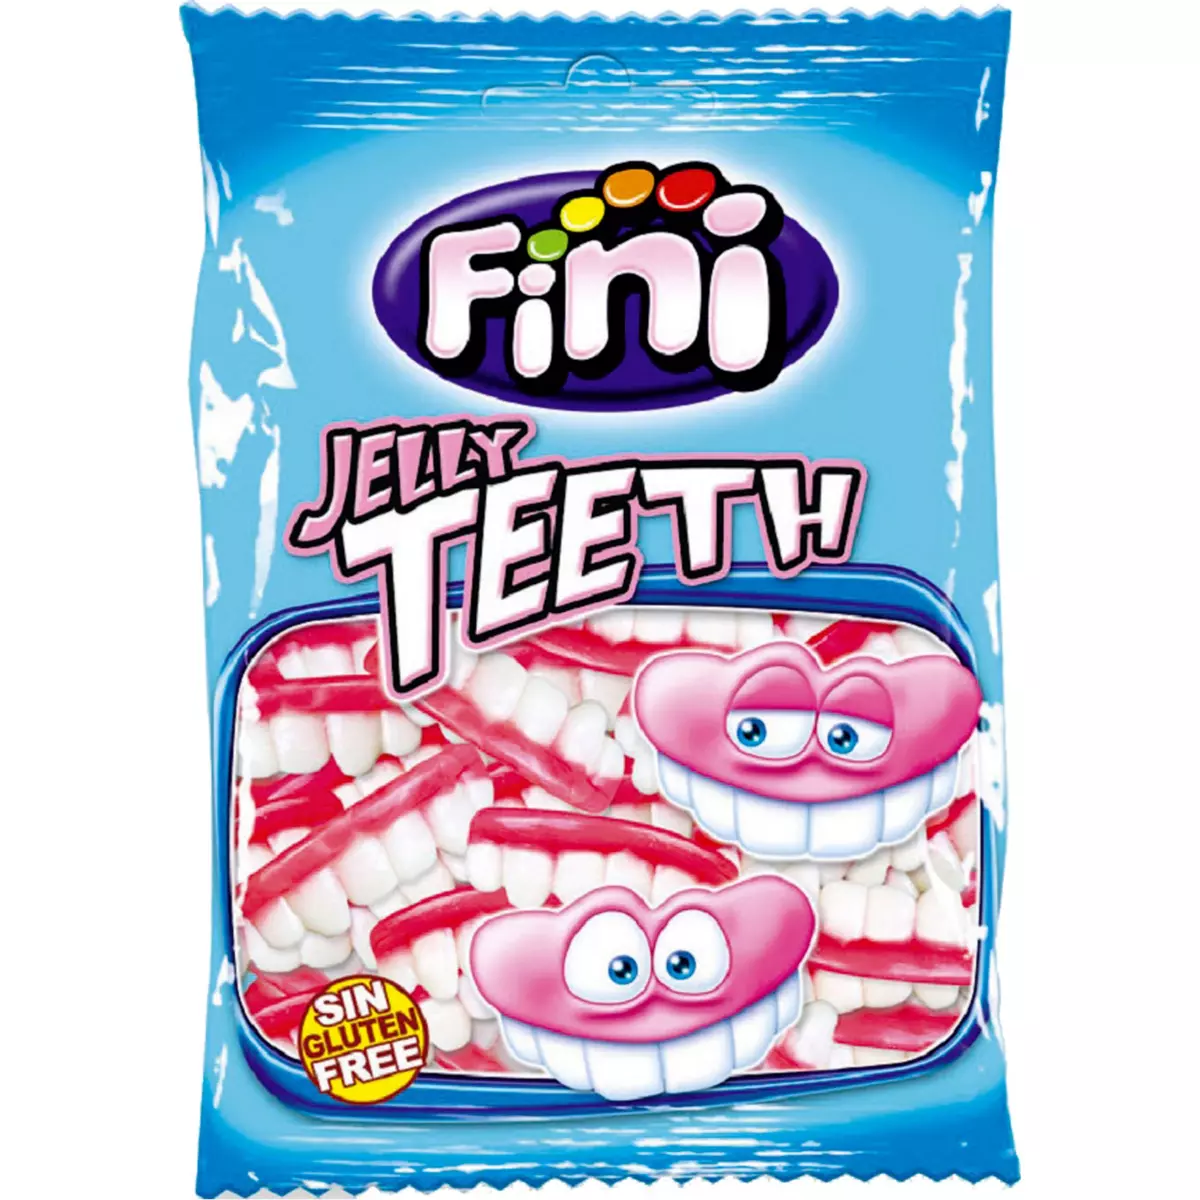 FINI Pucks jelly teeth 100g